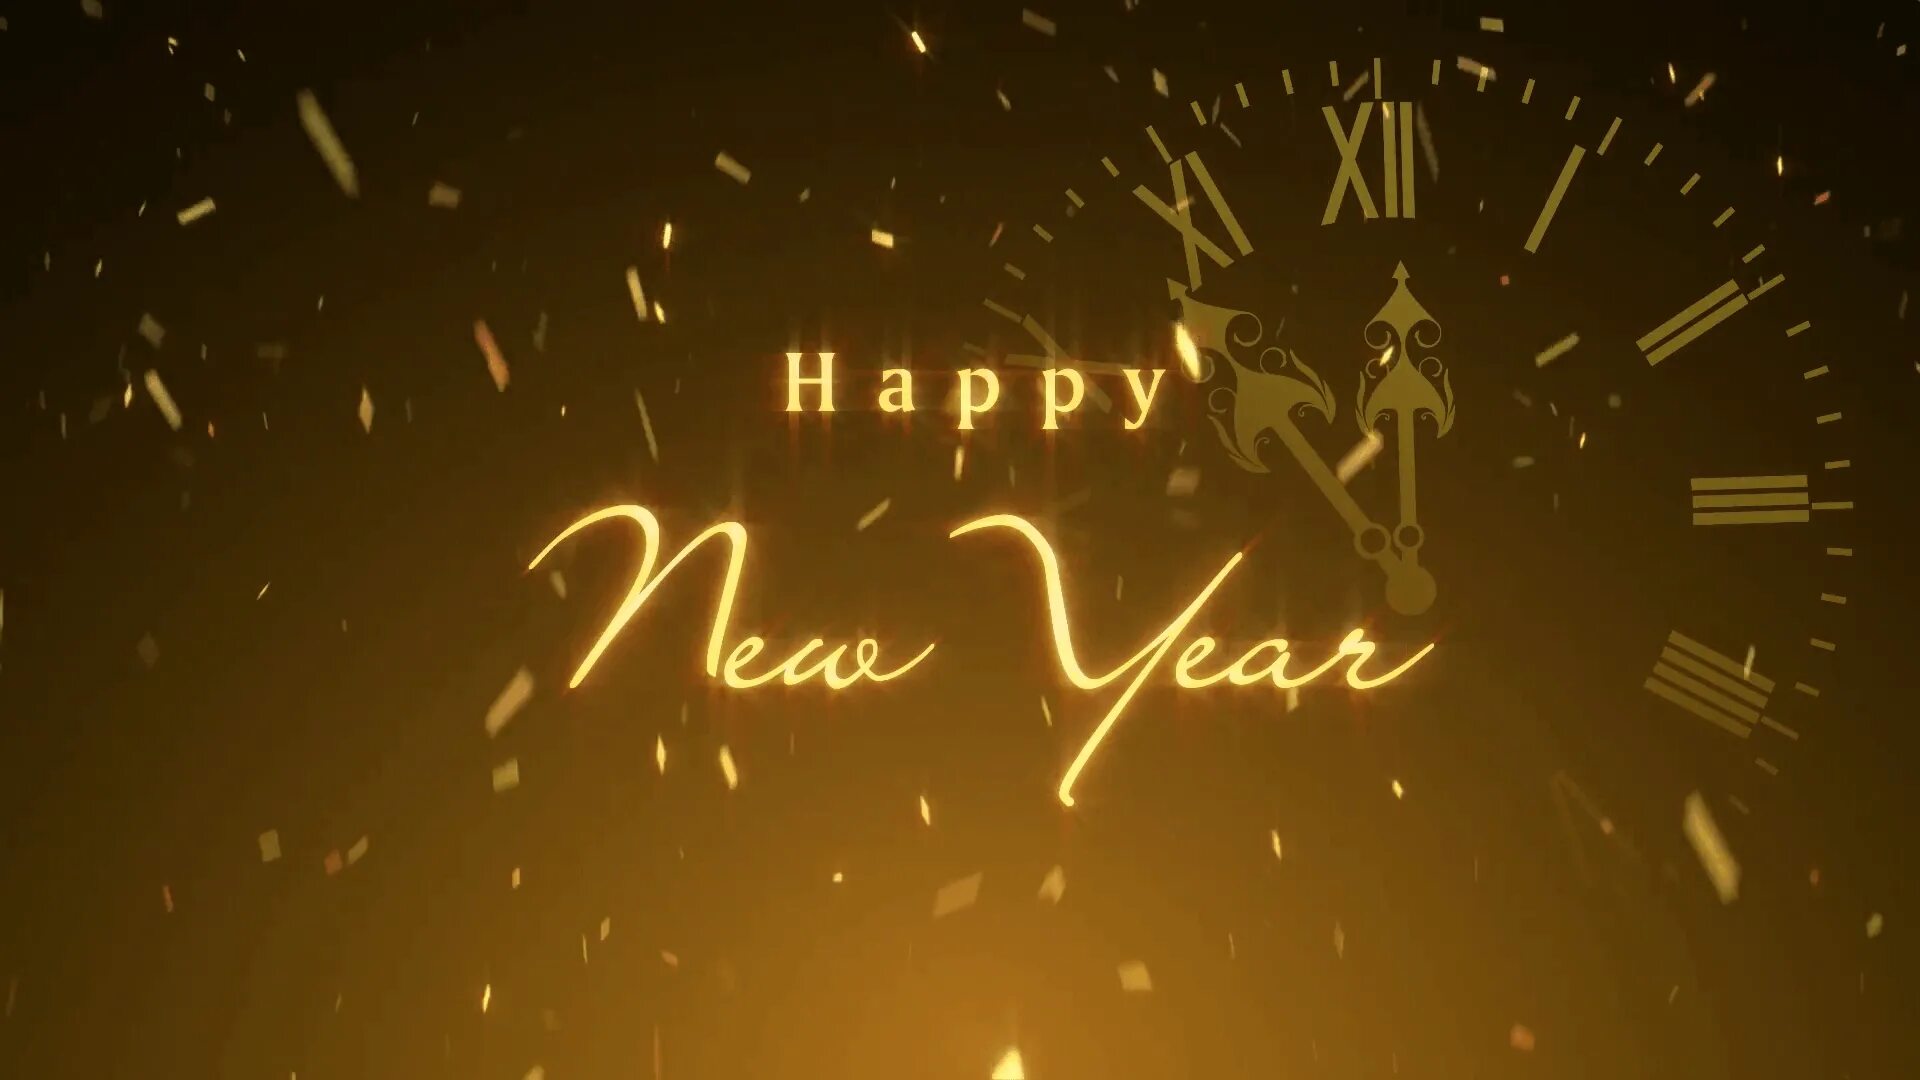 New years text. Happy New year. Happy New year обложка. Happy New year фон. Надпись Хэппи Нью еар.